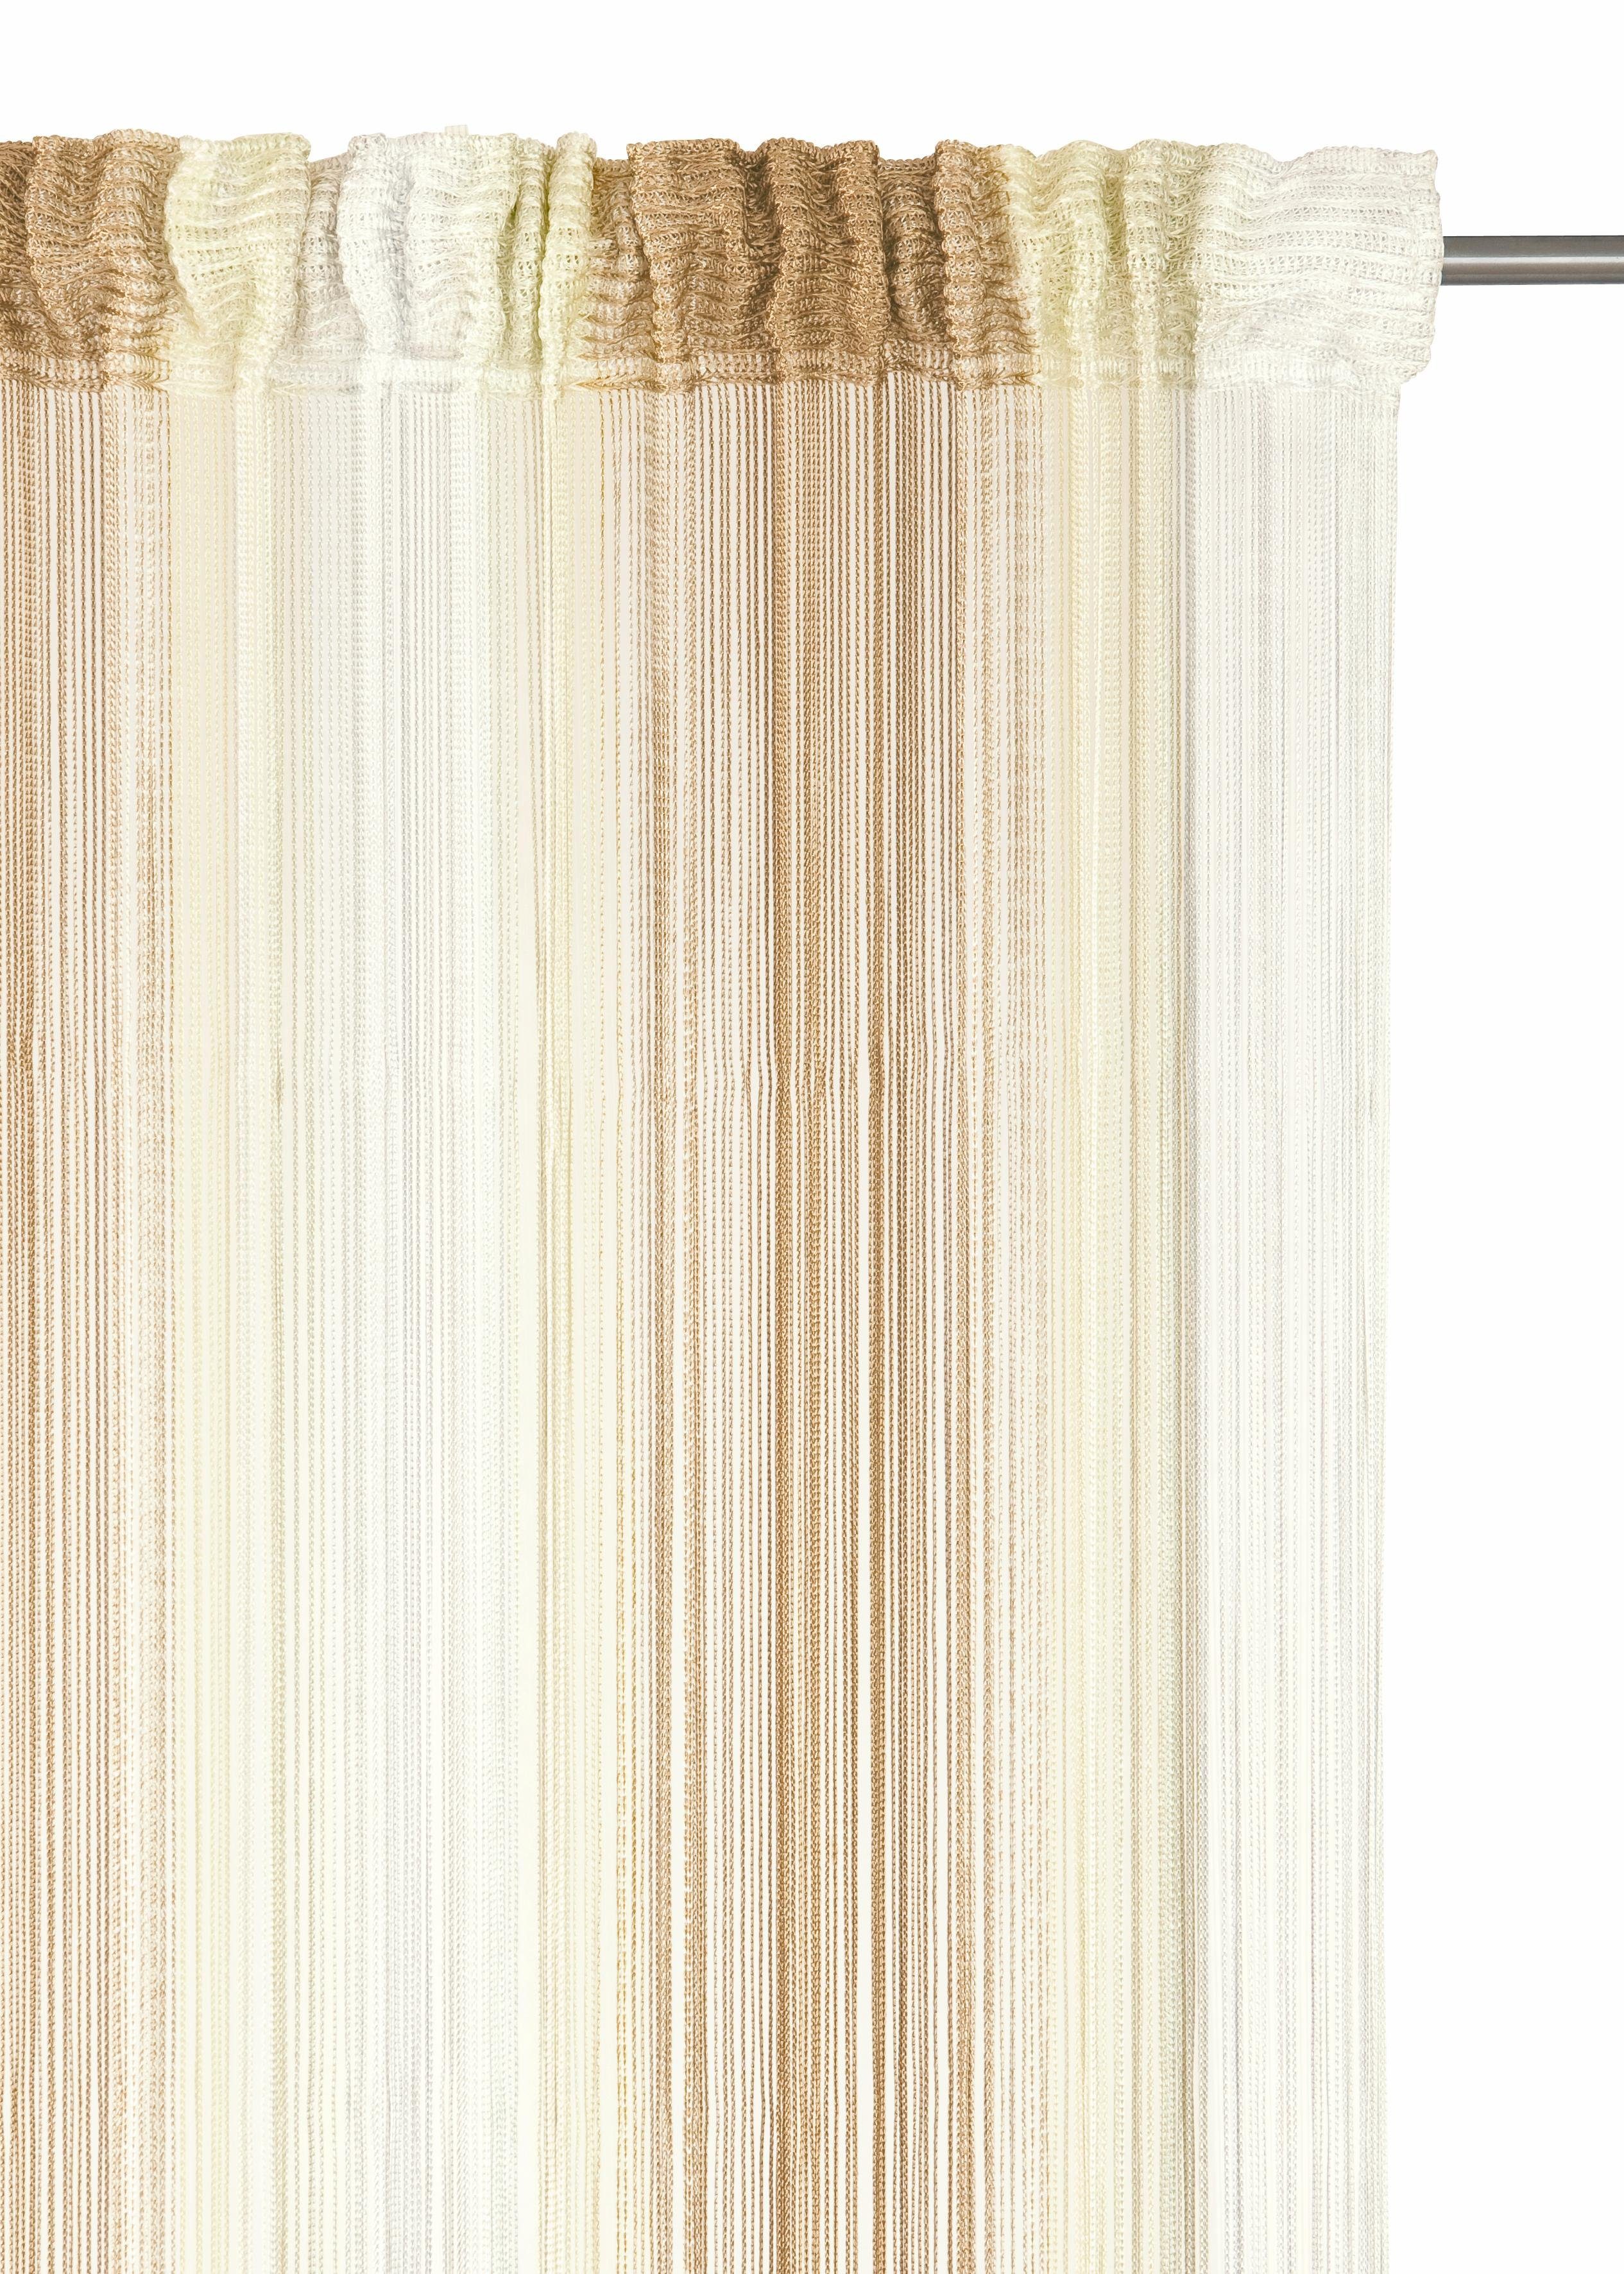 Fadenvorhang Rebecca, St), kürzbar Multifunktionsband Gardine, transparent, champagner/karamell halbtransparent, Weckbrodt, (1 Fadengardine, Insektenschutz